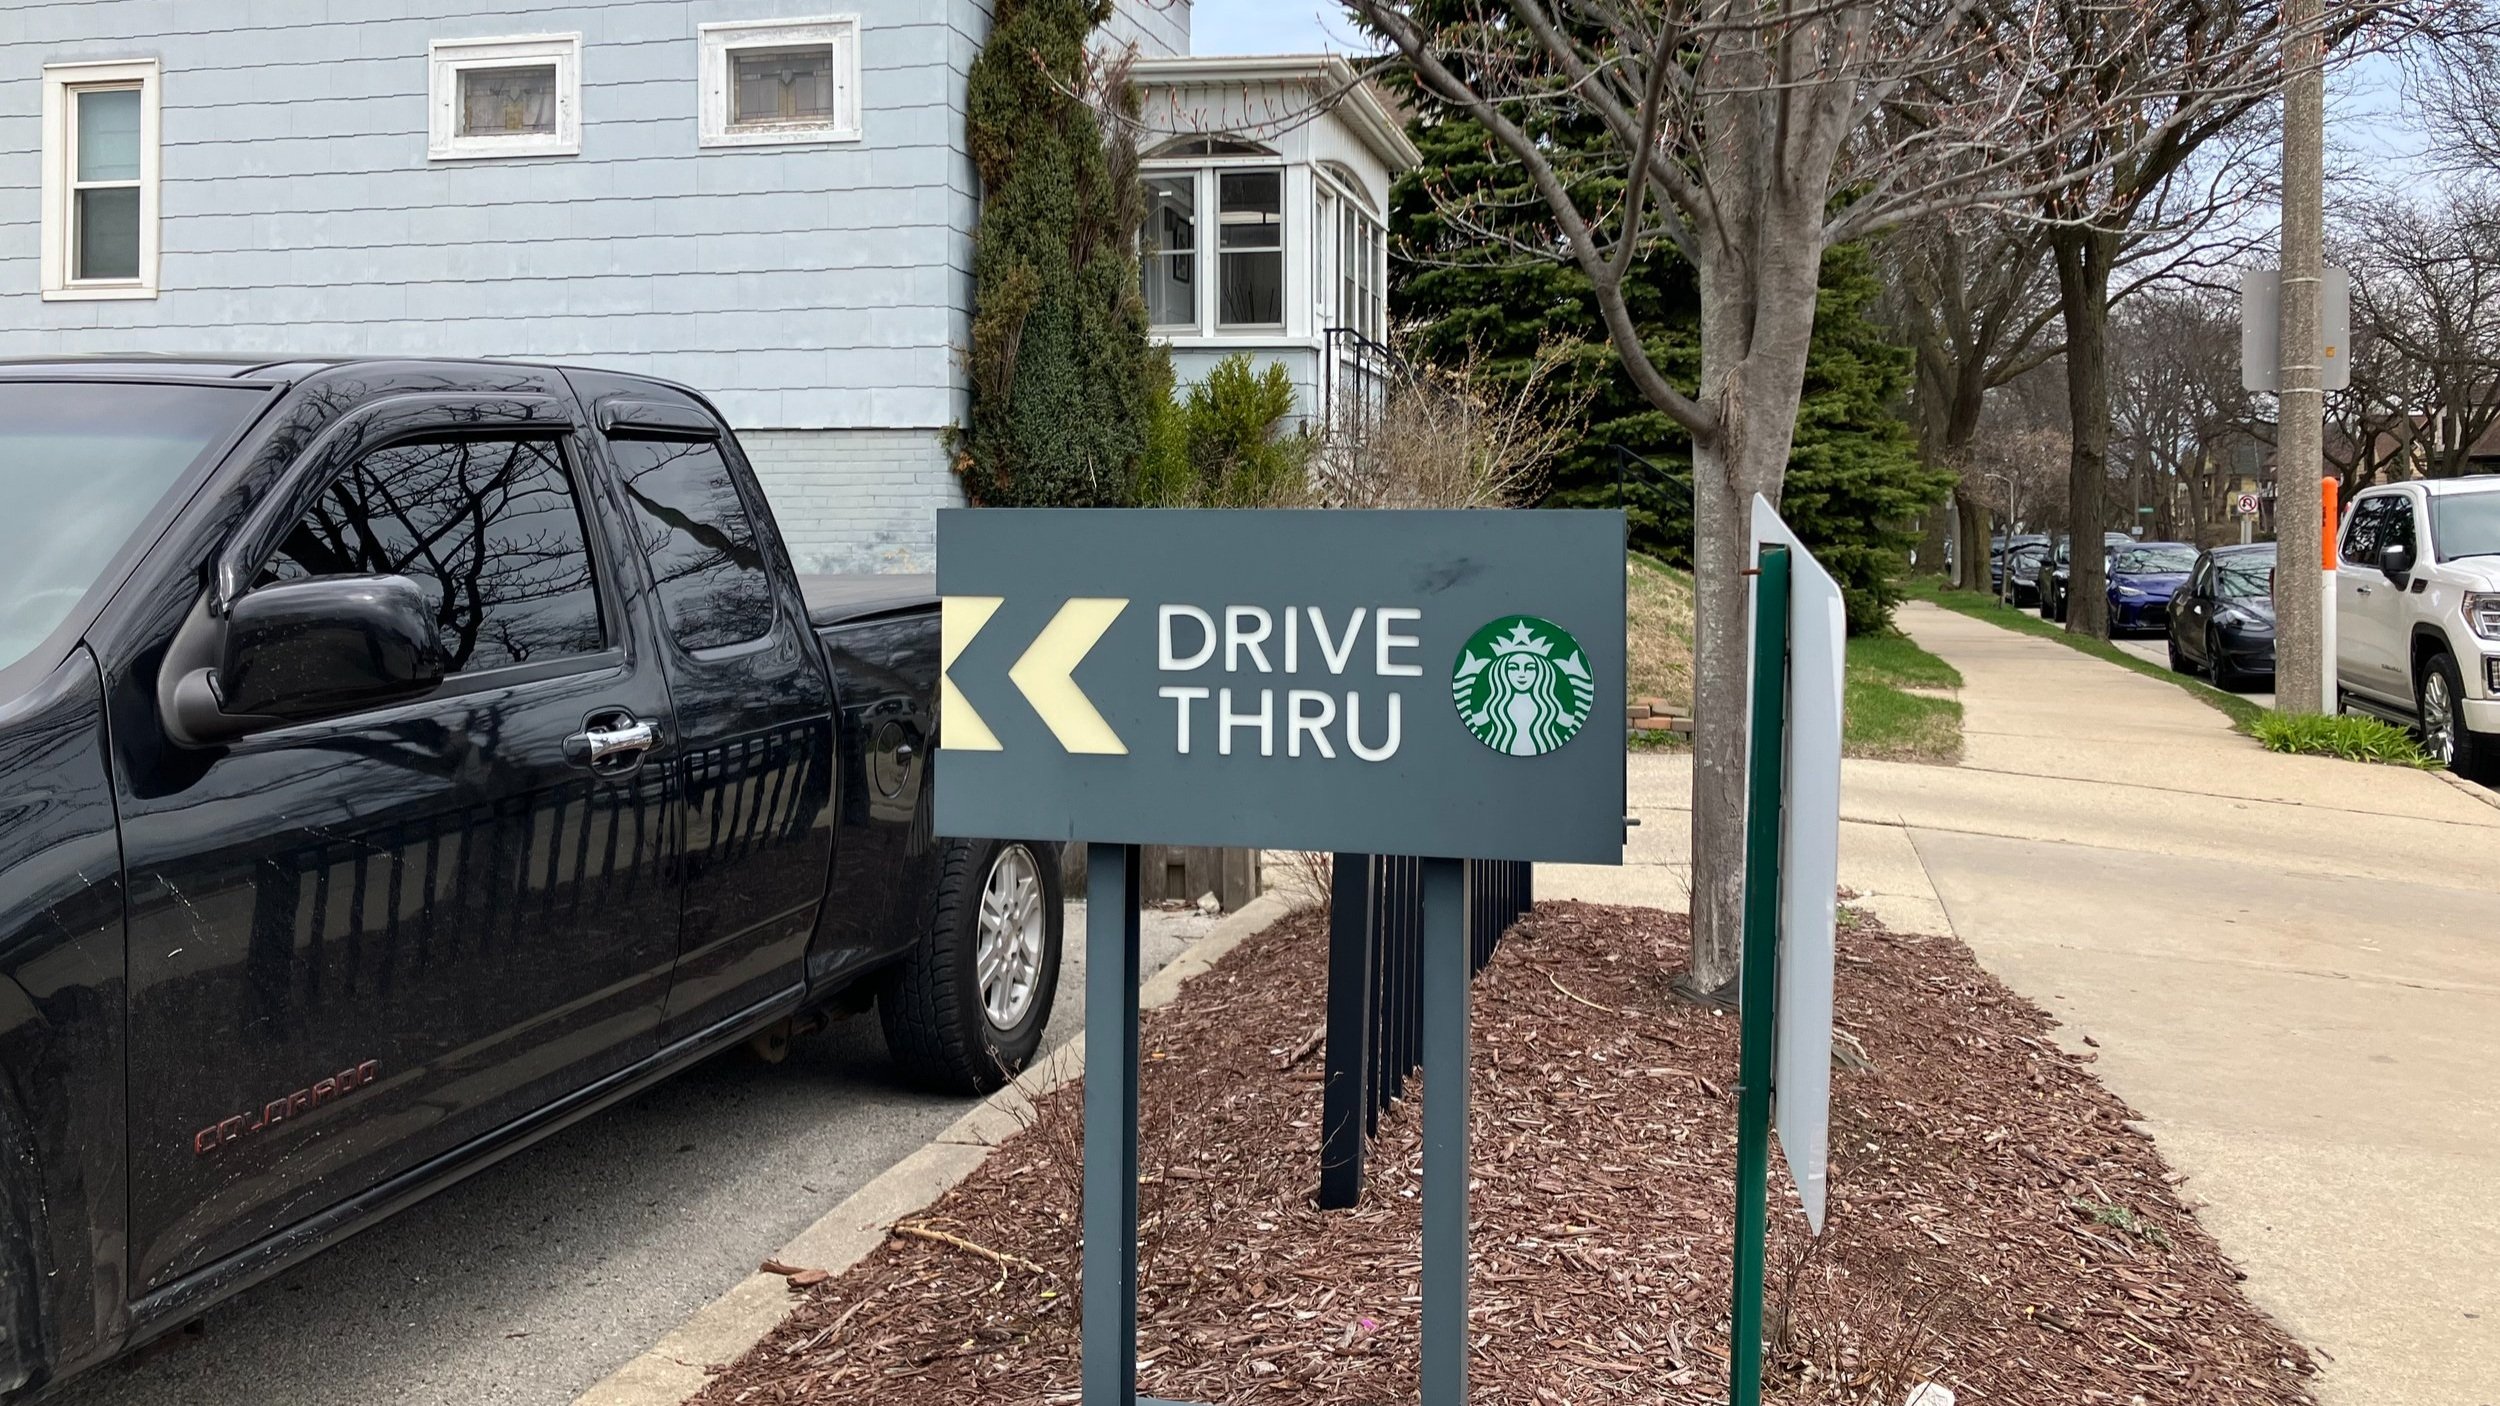 No More New Drive-Thrus, Minneapolis City Council Says